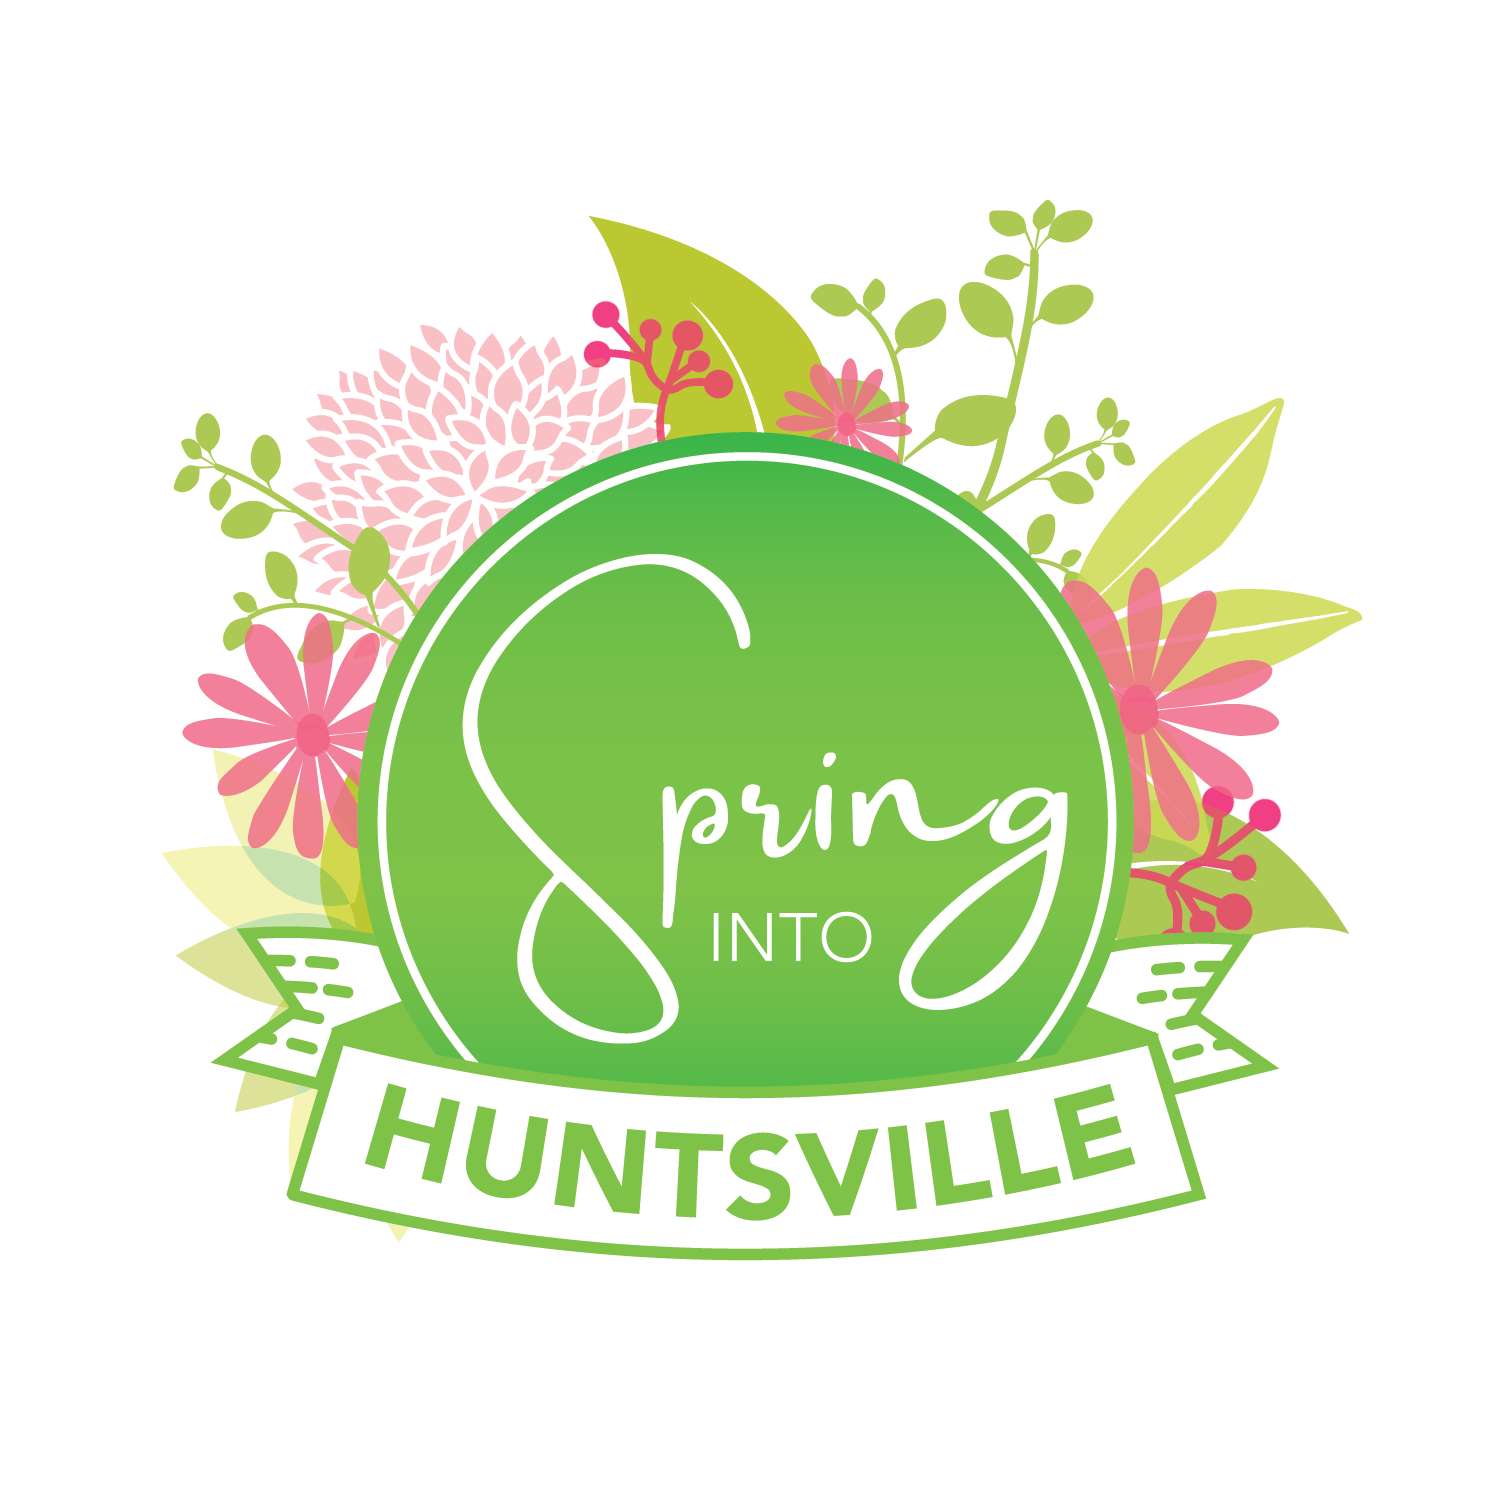 Spring into Huntsville travel offer